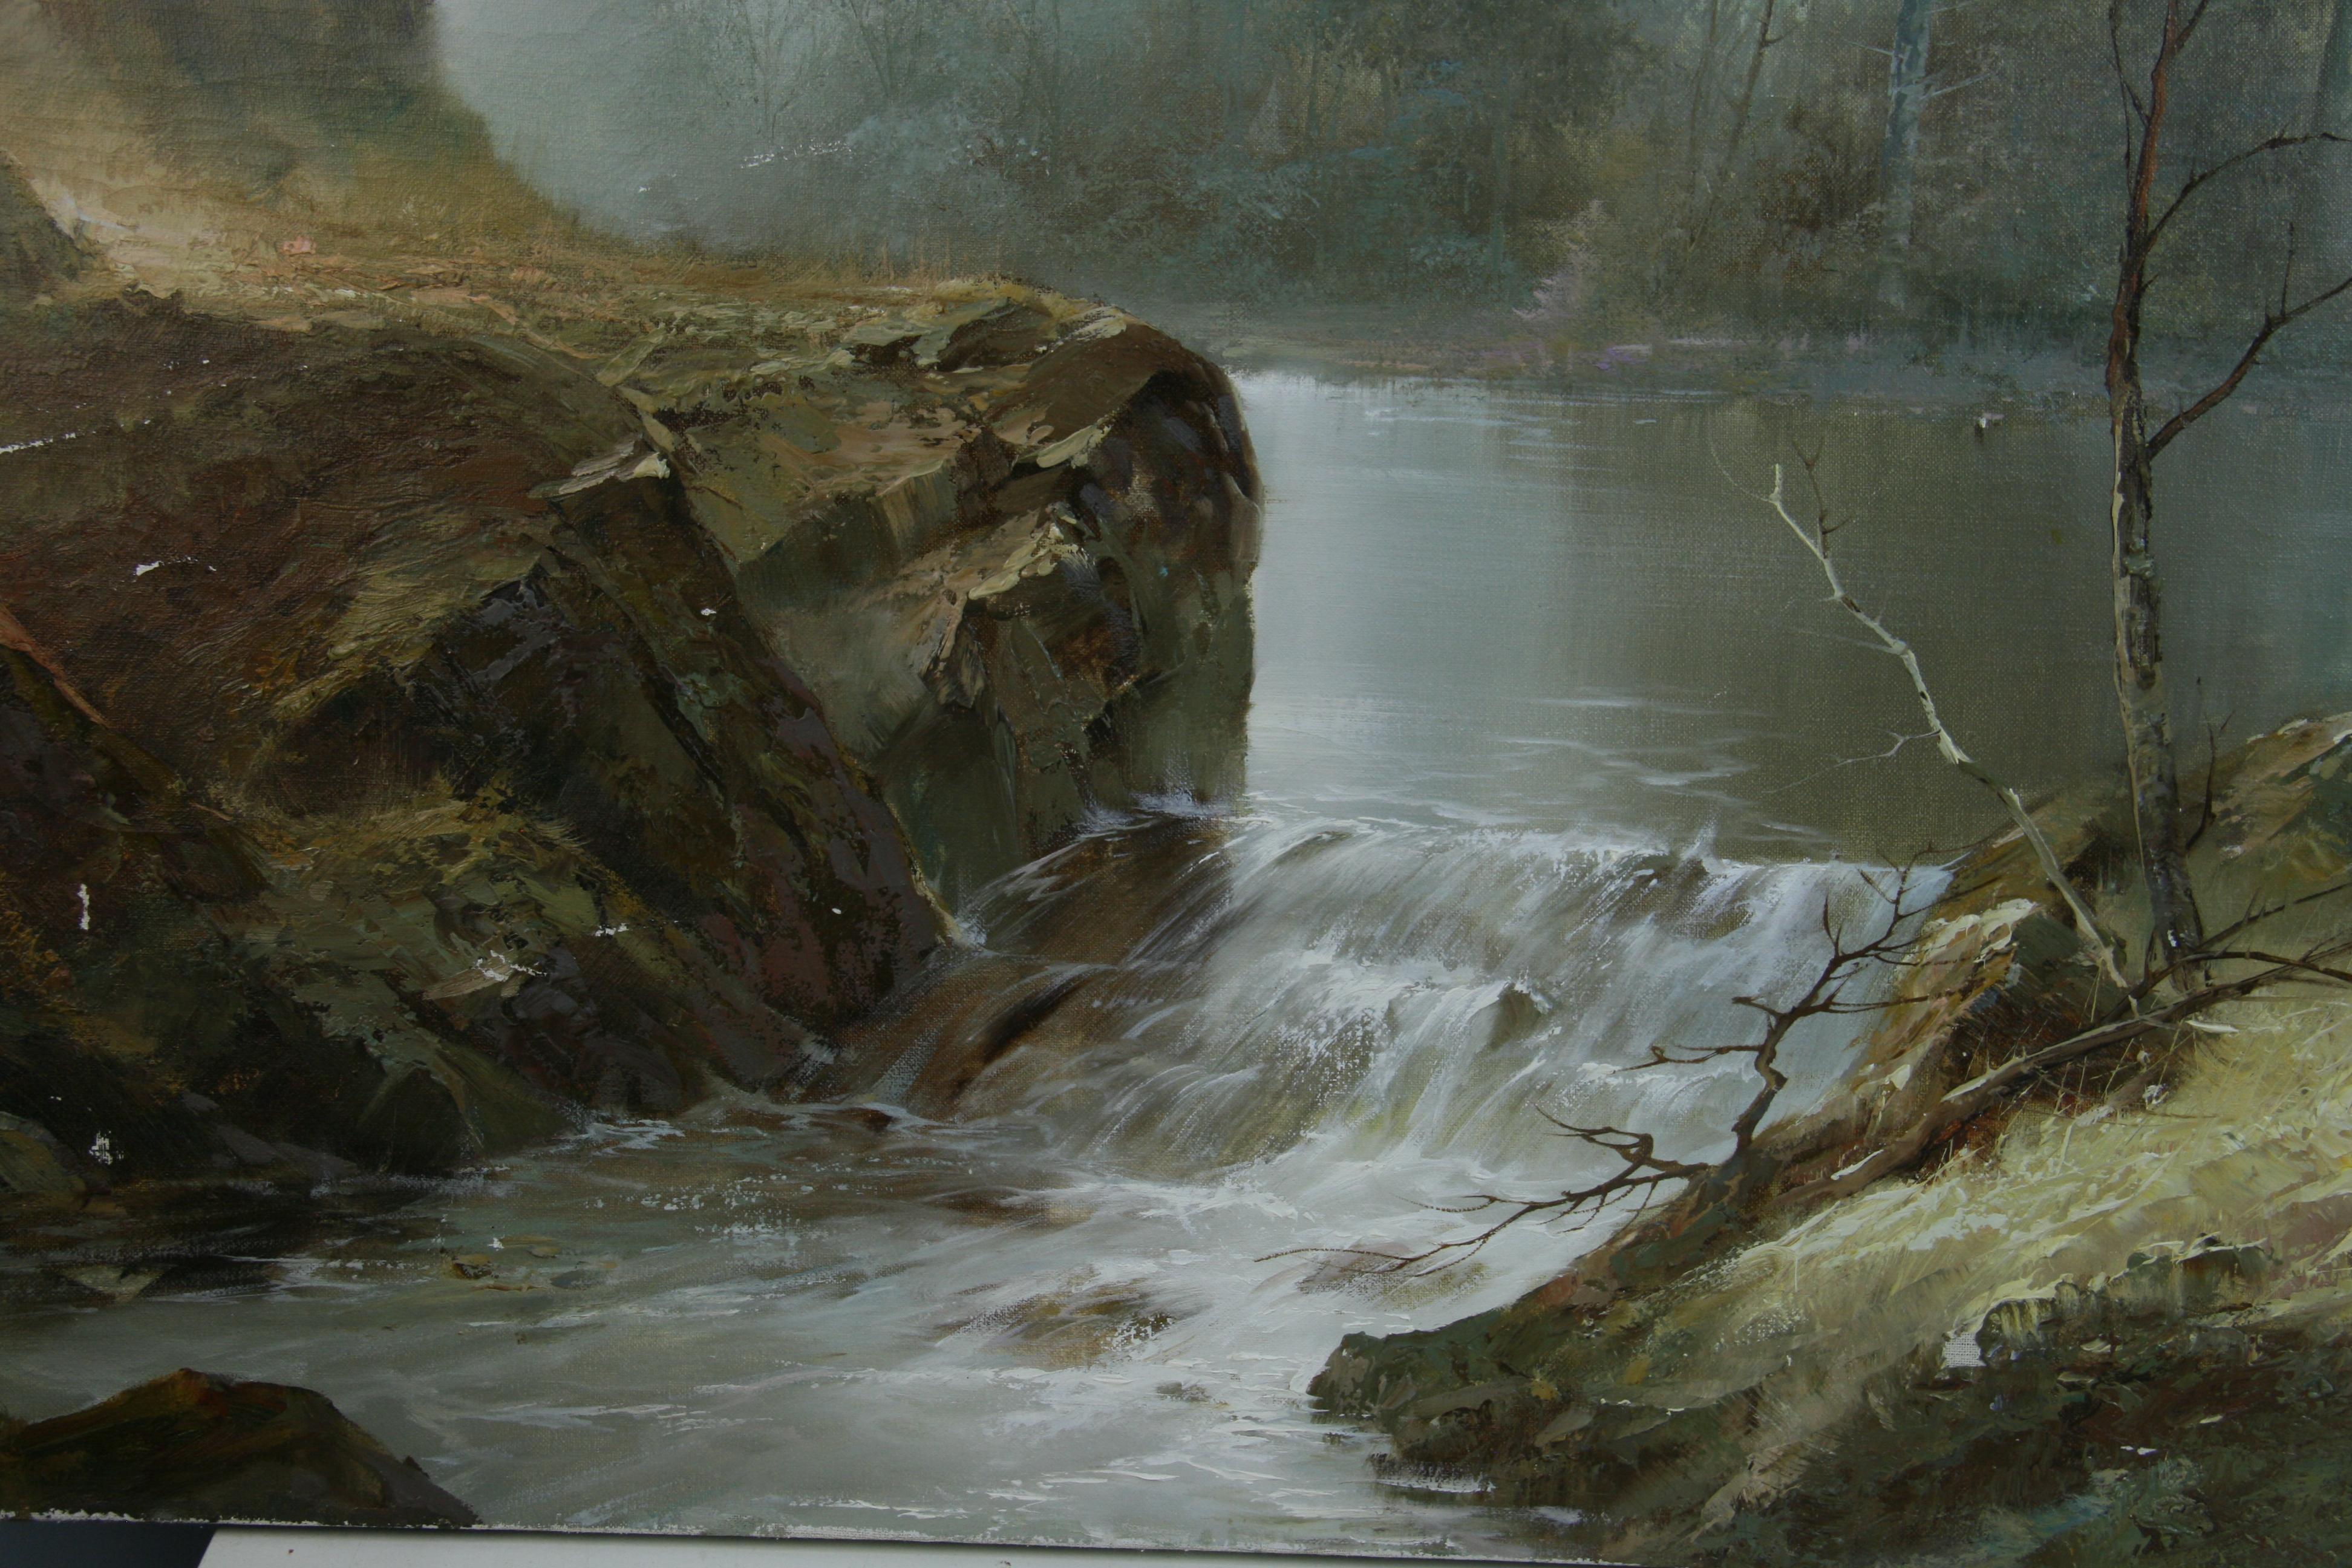 4017 Misty morning landscape oil painting
Unframed
Signed Fanny Lee